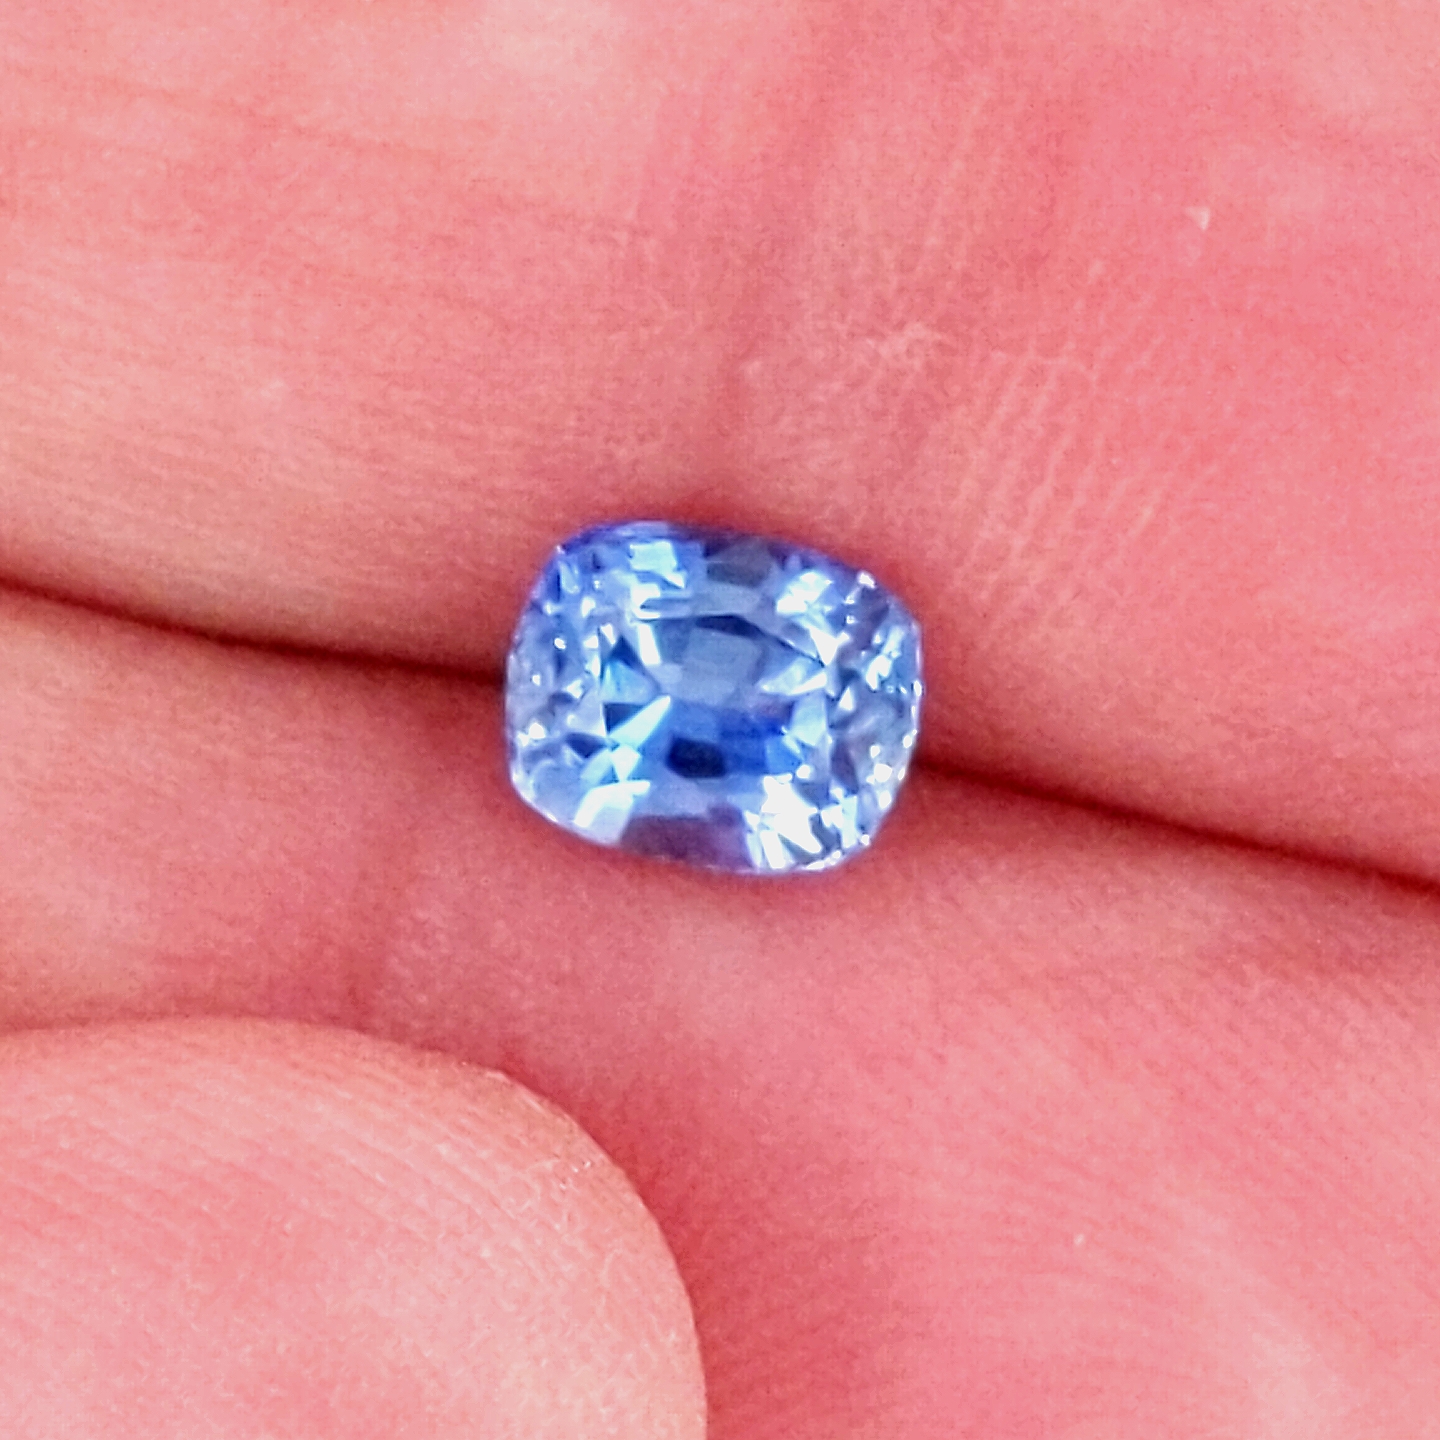 Sri Lanka Cushion Cut Blue Sapphire 1.35 Cts 6.7x5.6x4.1mm - Simply ...